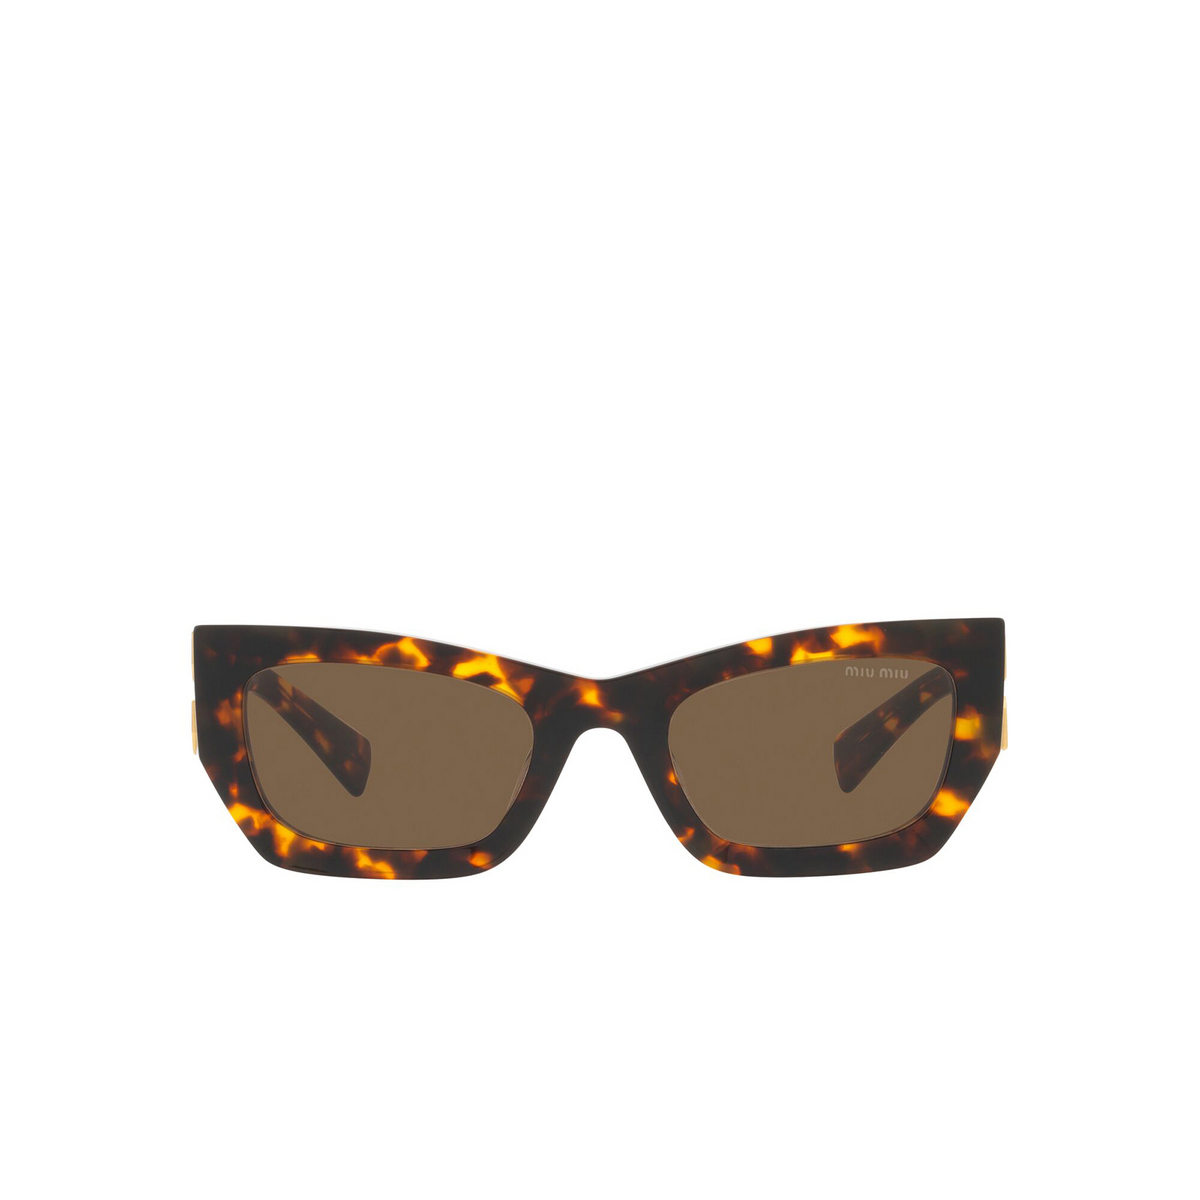 Miu Miu® Rectangle Sunglasses: MU 09WS color VAU06B Honey Havana - front view